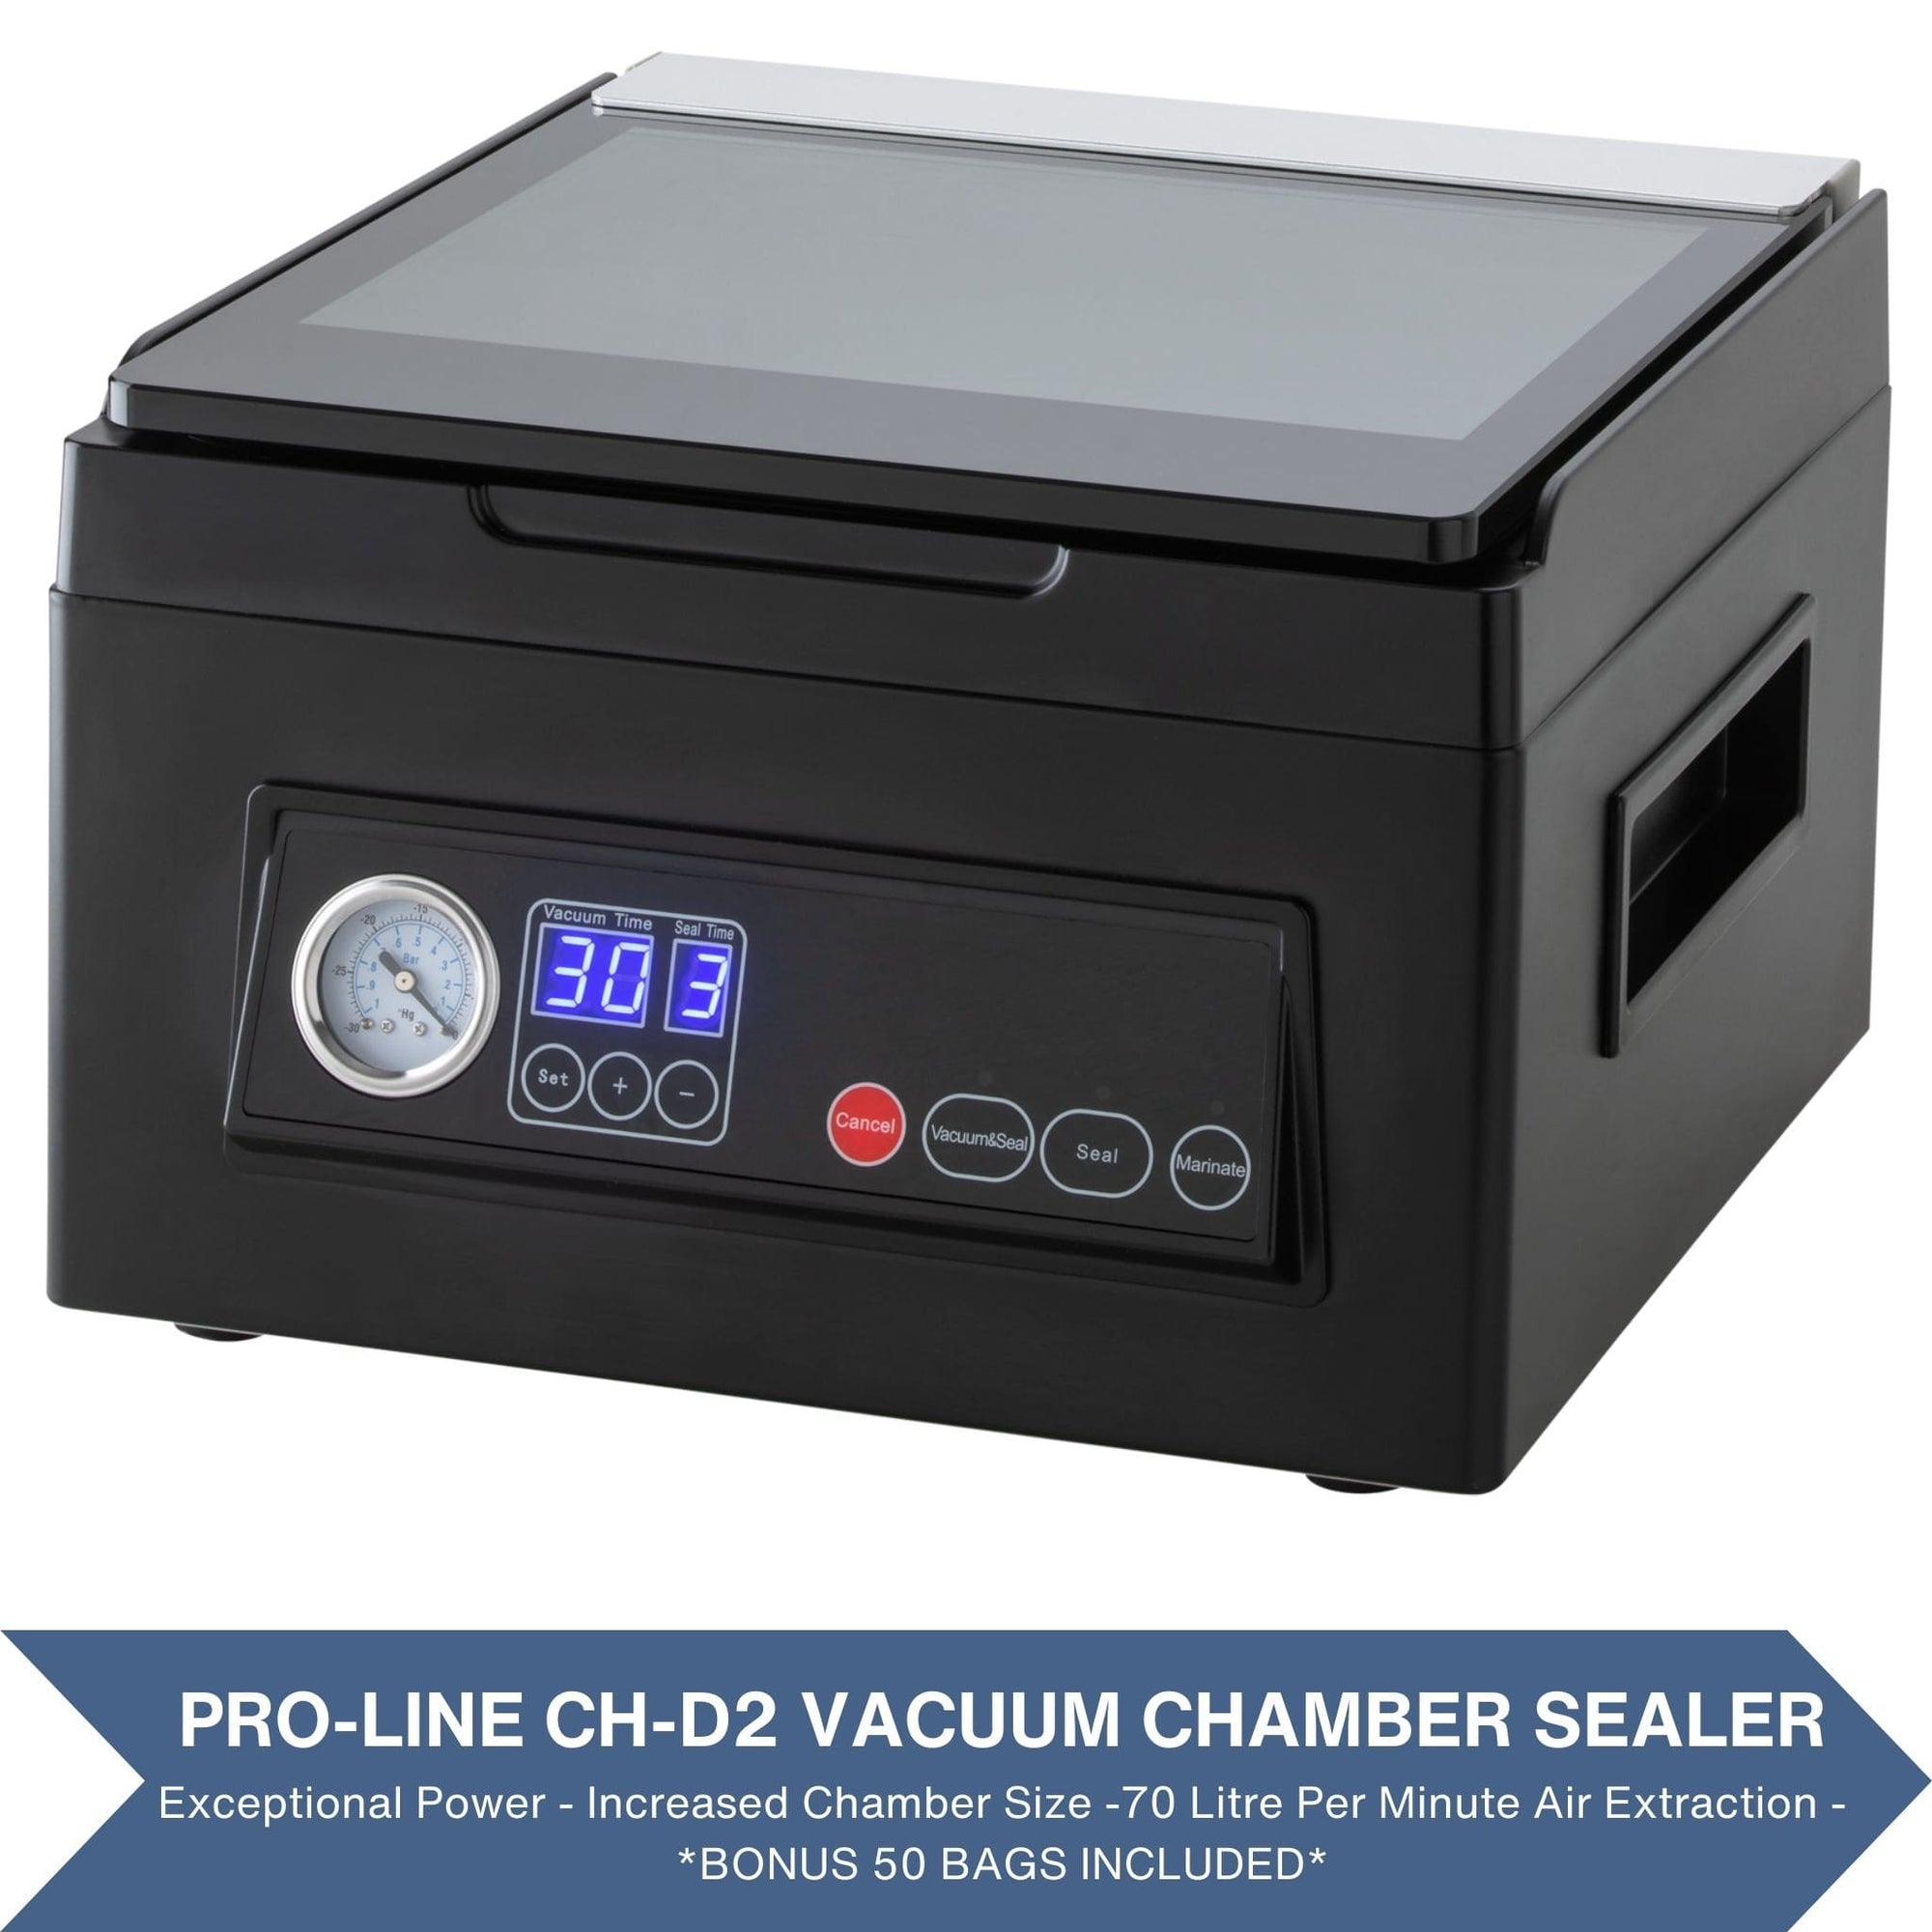 Anova Precision Chamber Vacuum vs Avid Armor USV20 Chamber Vacuum 